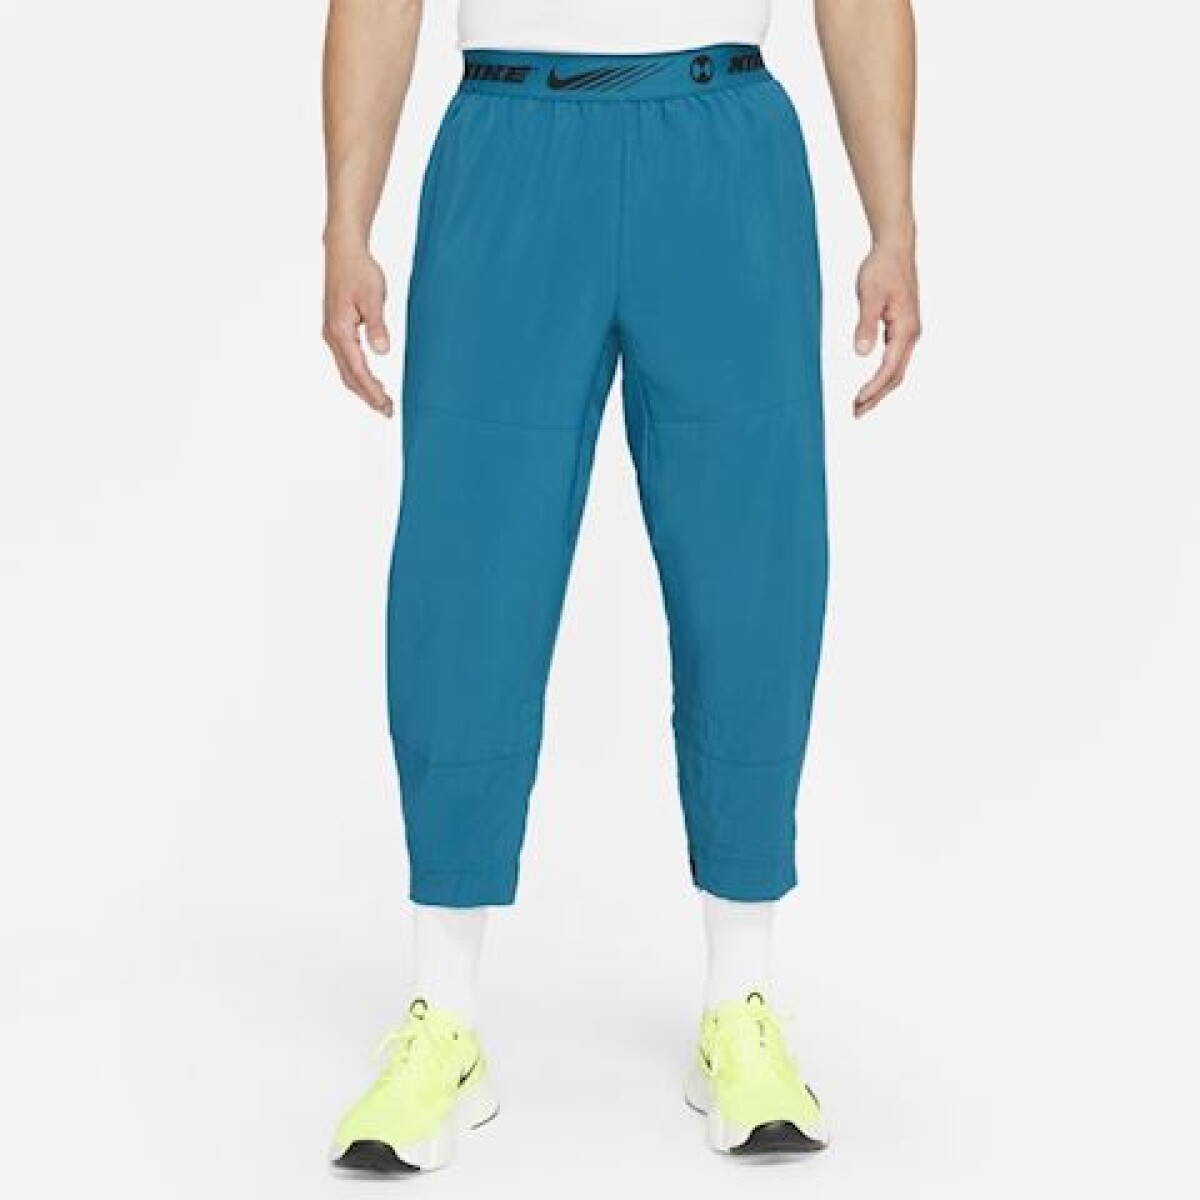 Pantalon Nike training hombre GREEN ABYSS/(MEAN GREEN) - Color Único 